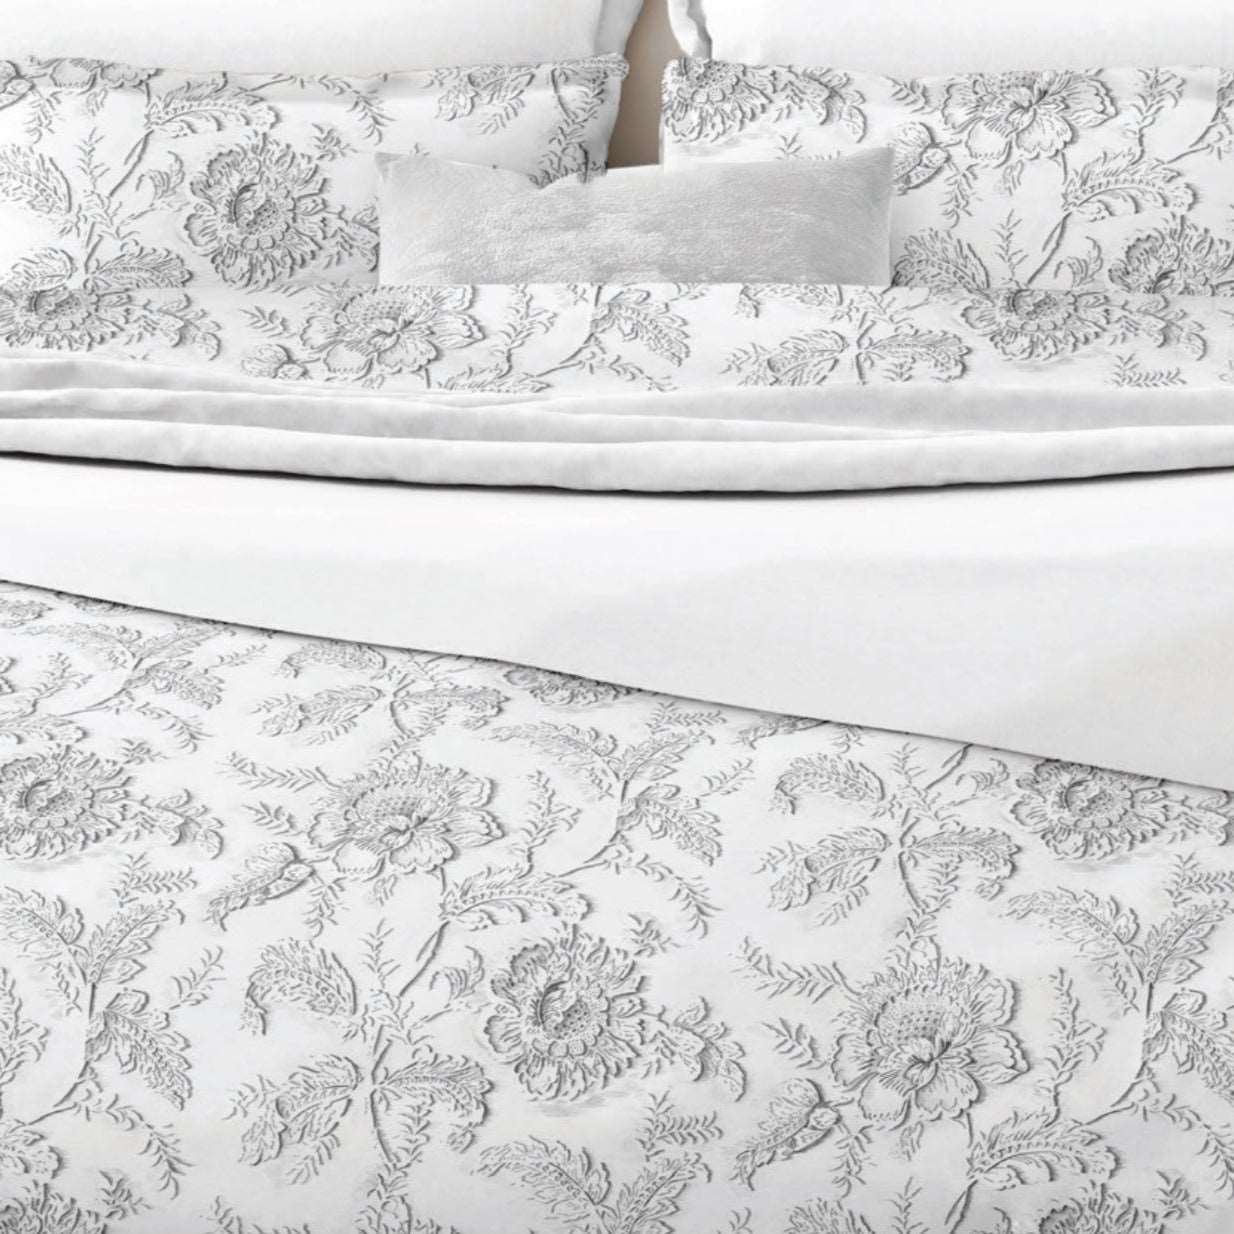 Light grey floral on a white background. Belledorm Ella Range 100% otton duvet set